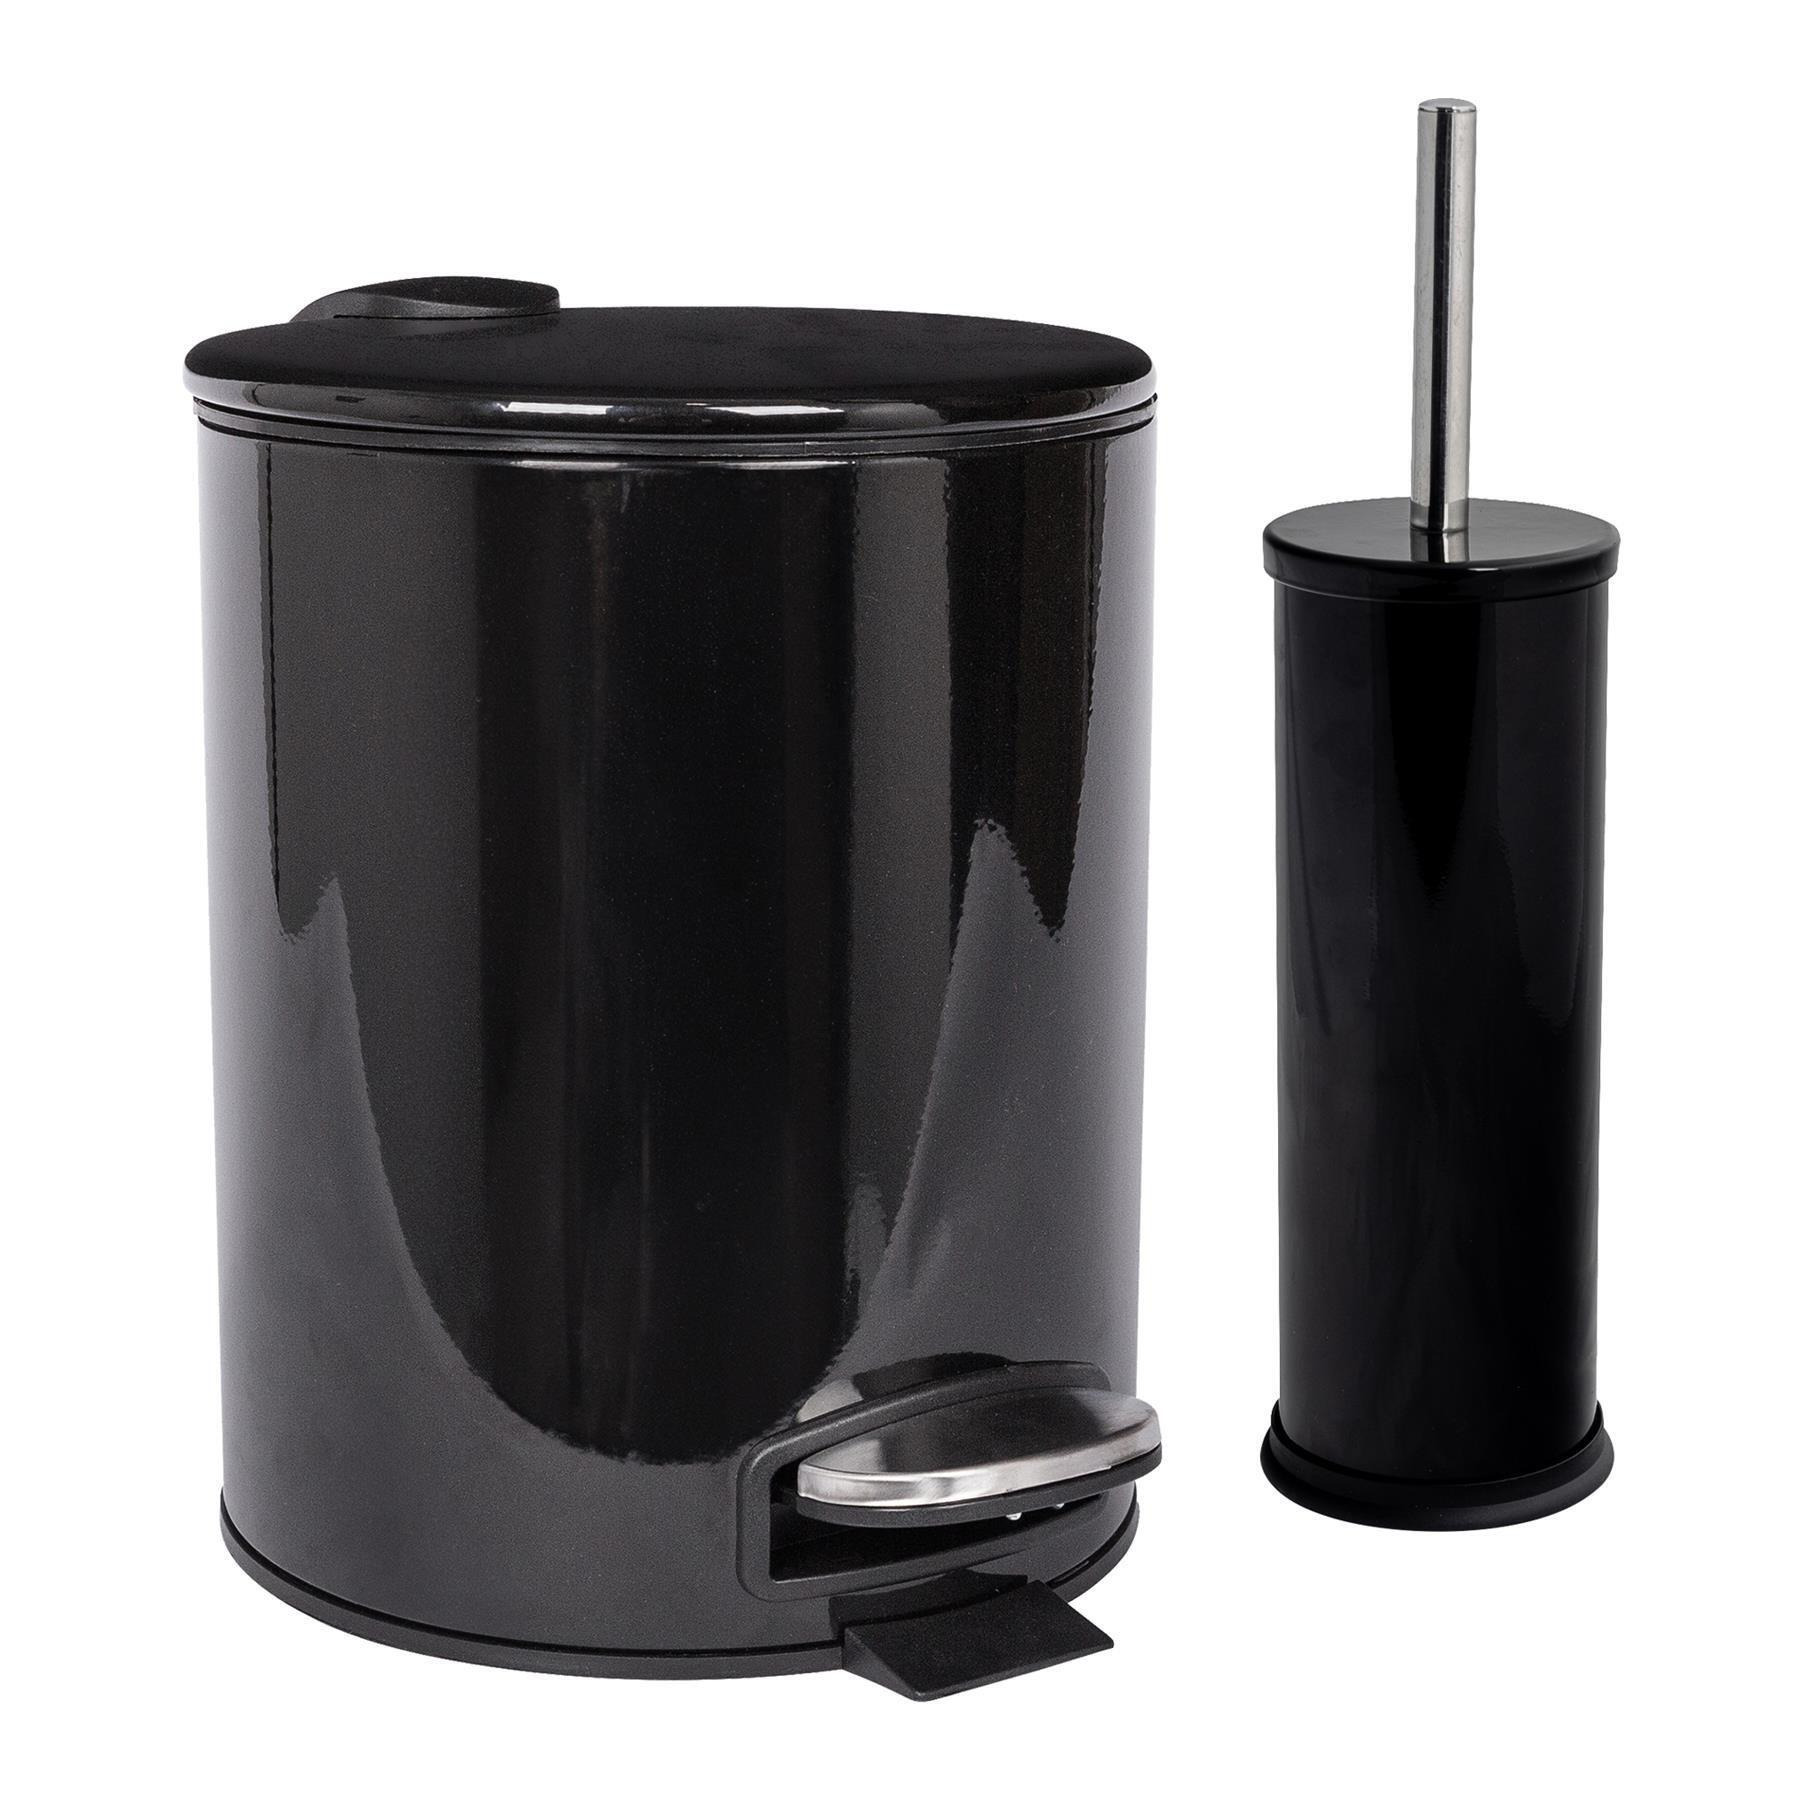 2pc Round Stainless Steel Pedal Bin & Toilet Brush Set - 5L - Black - image 1